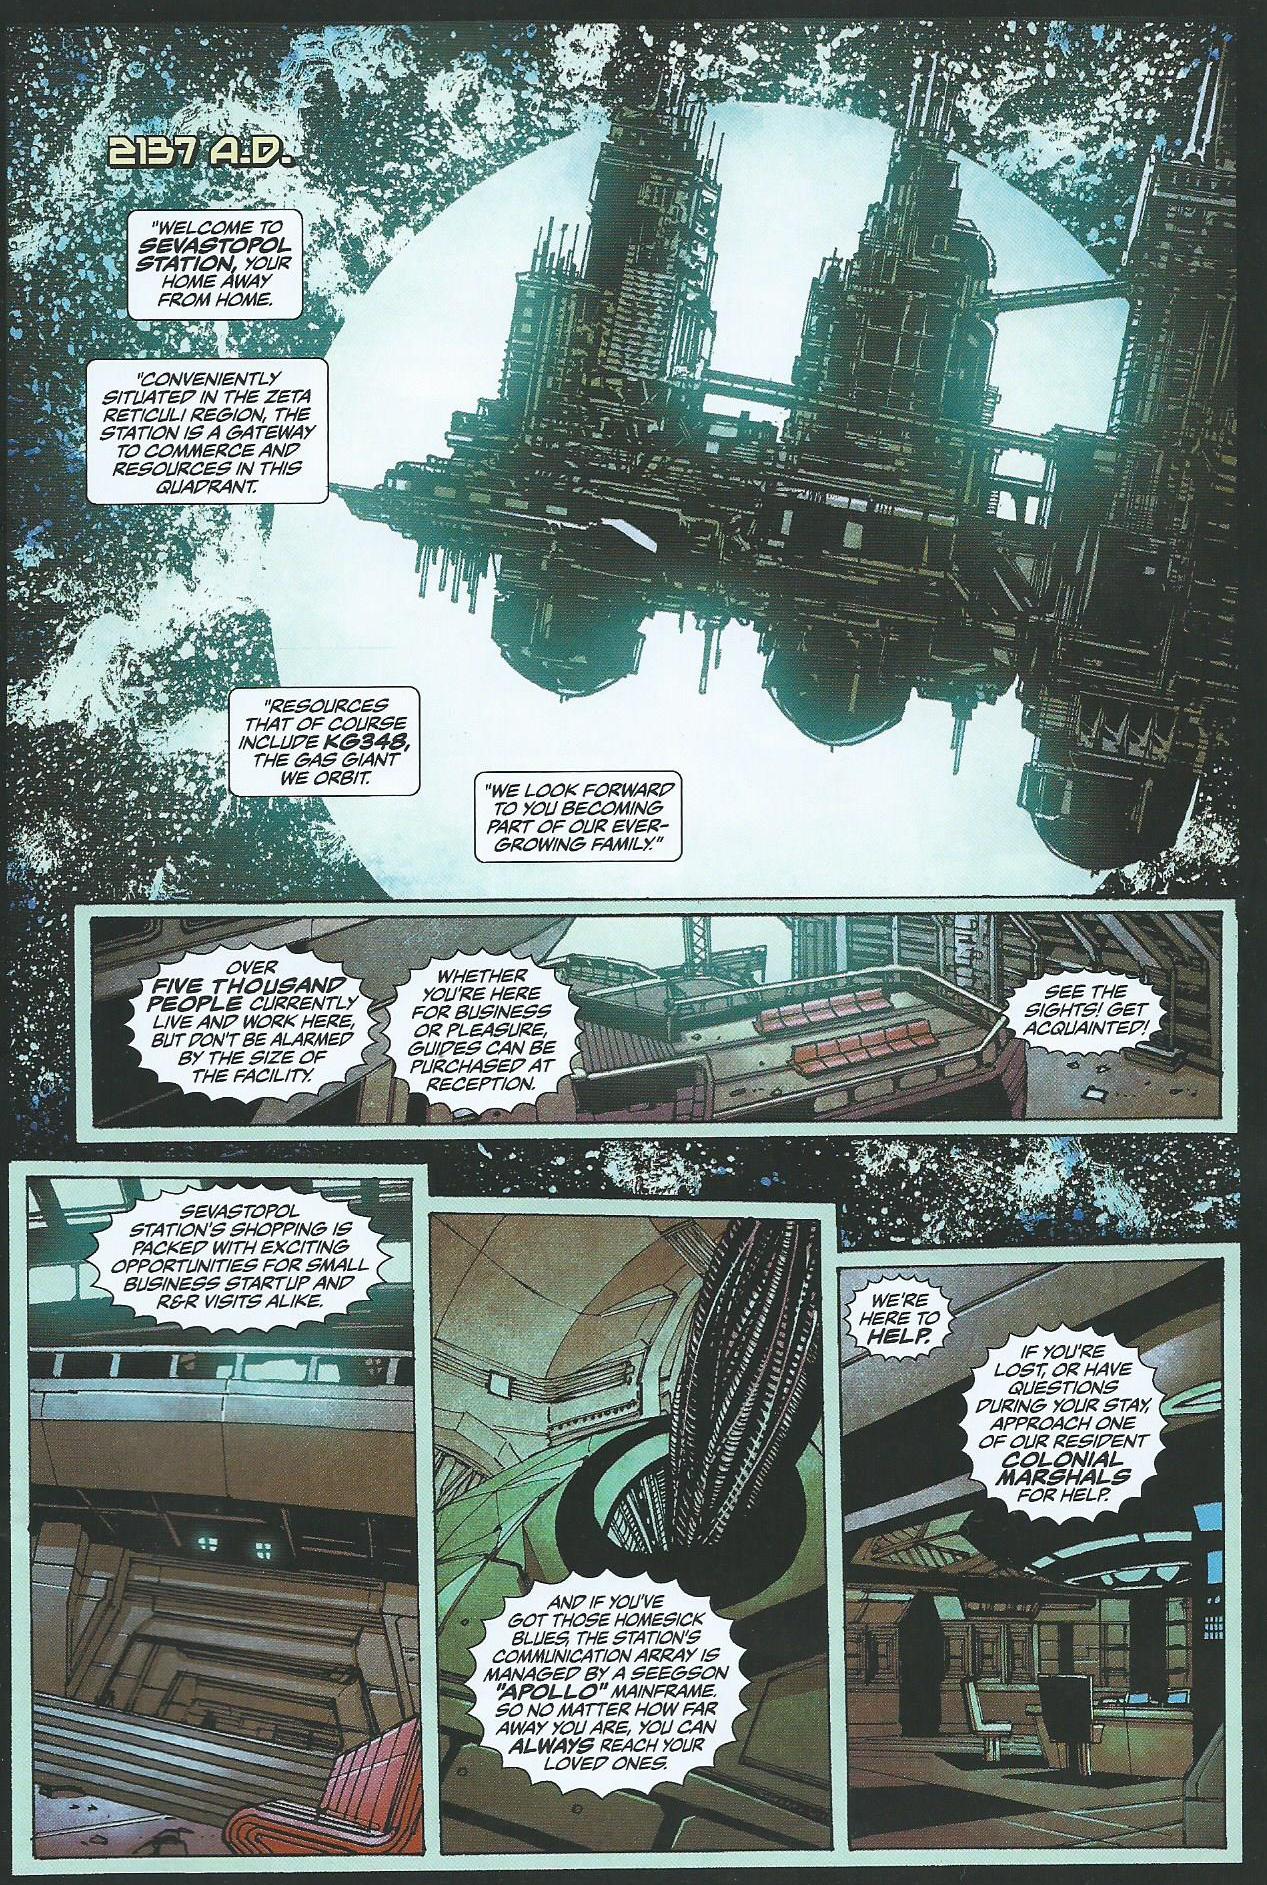 Alien: Isolation comic | Weyland-Yutani corporation Wiki | FANDOM